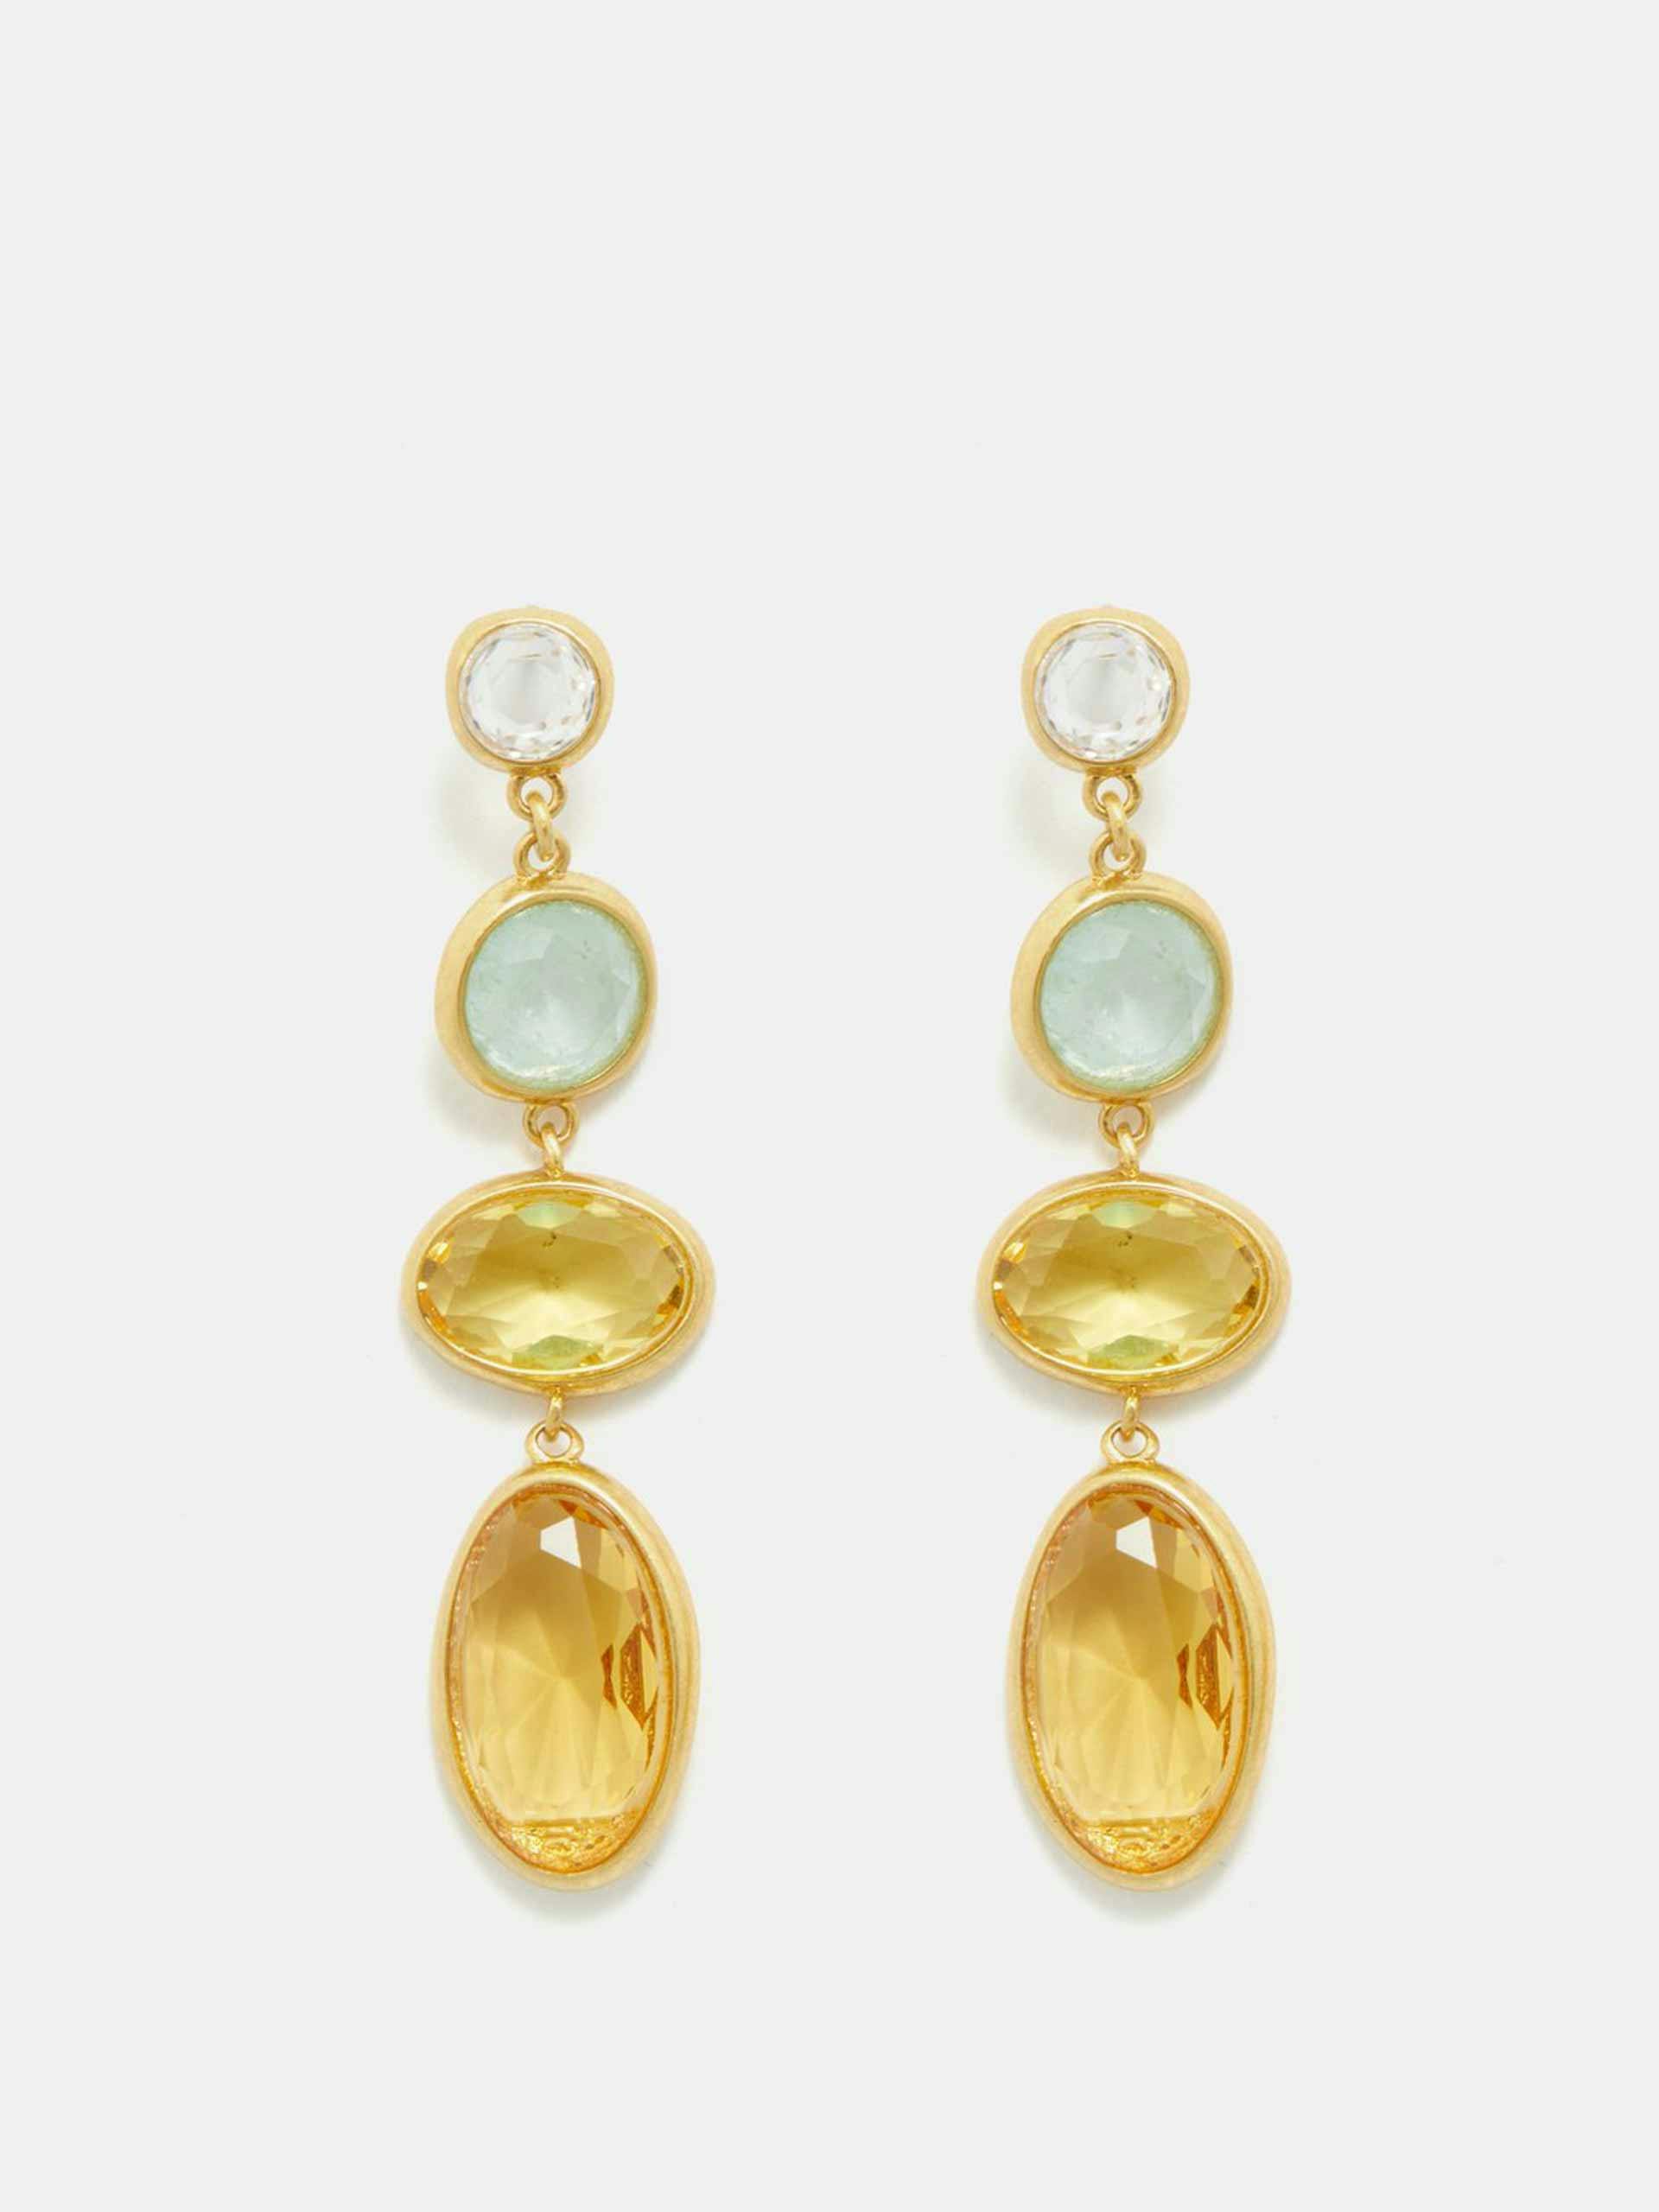 Gold-tone and gemstone drop earrings